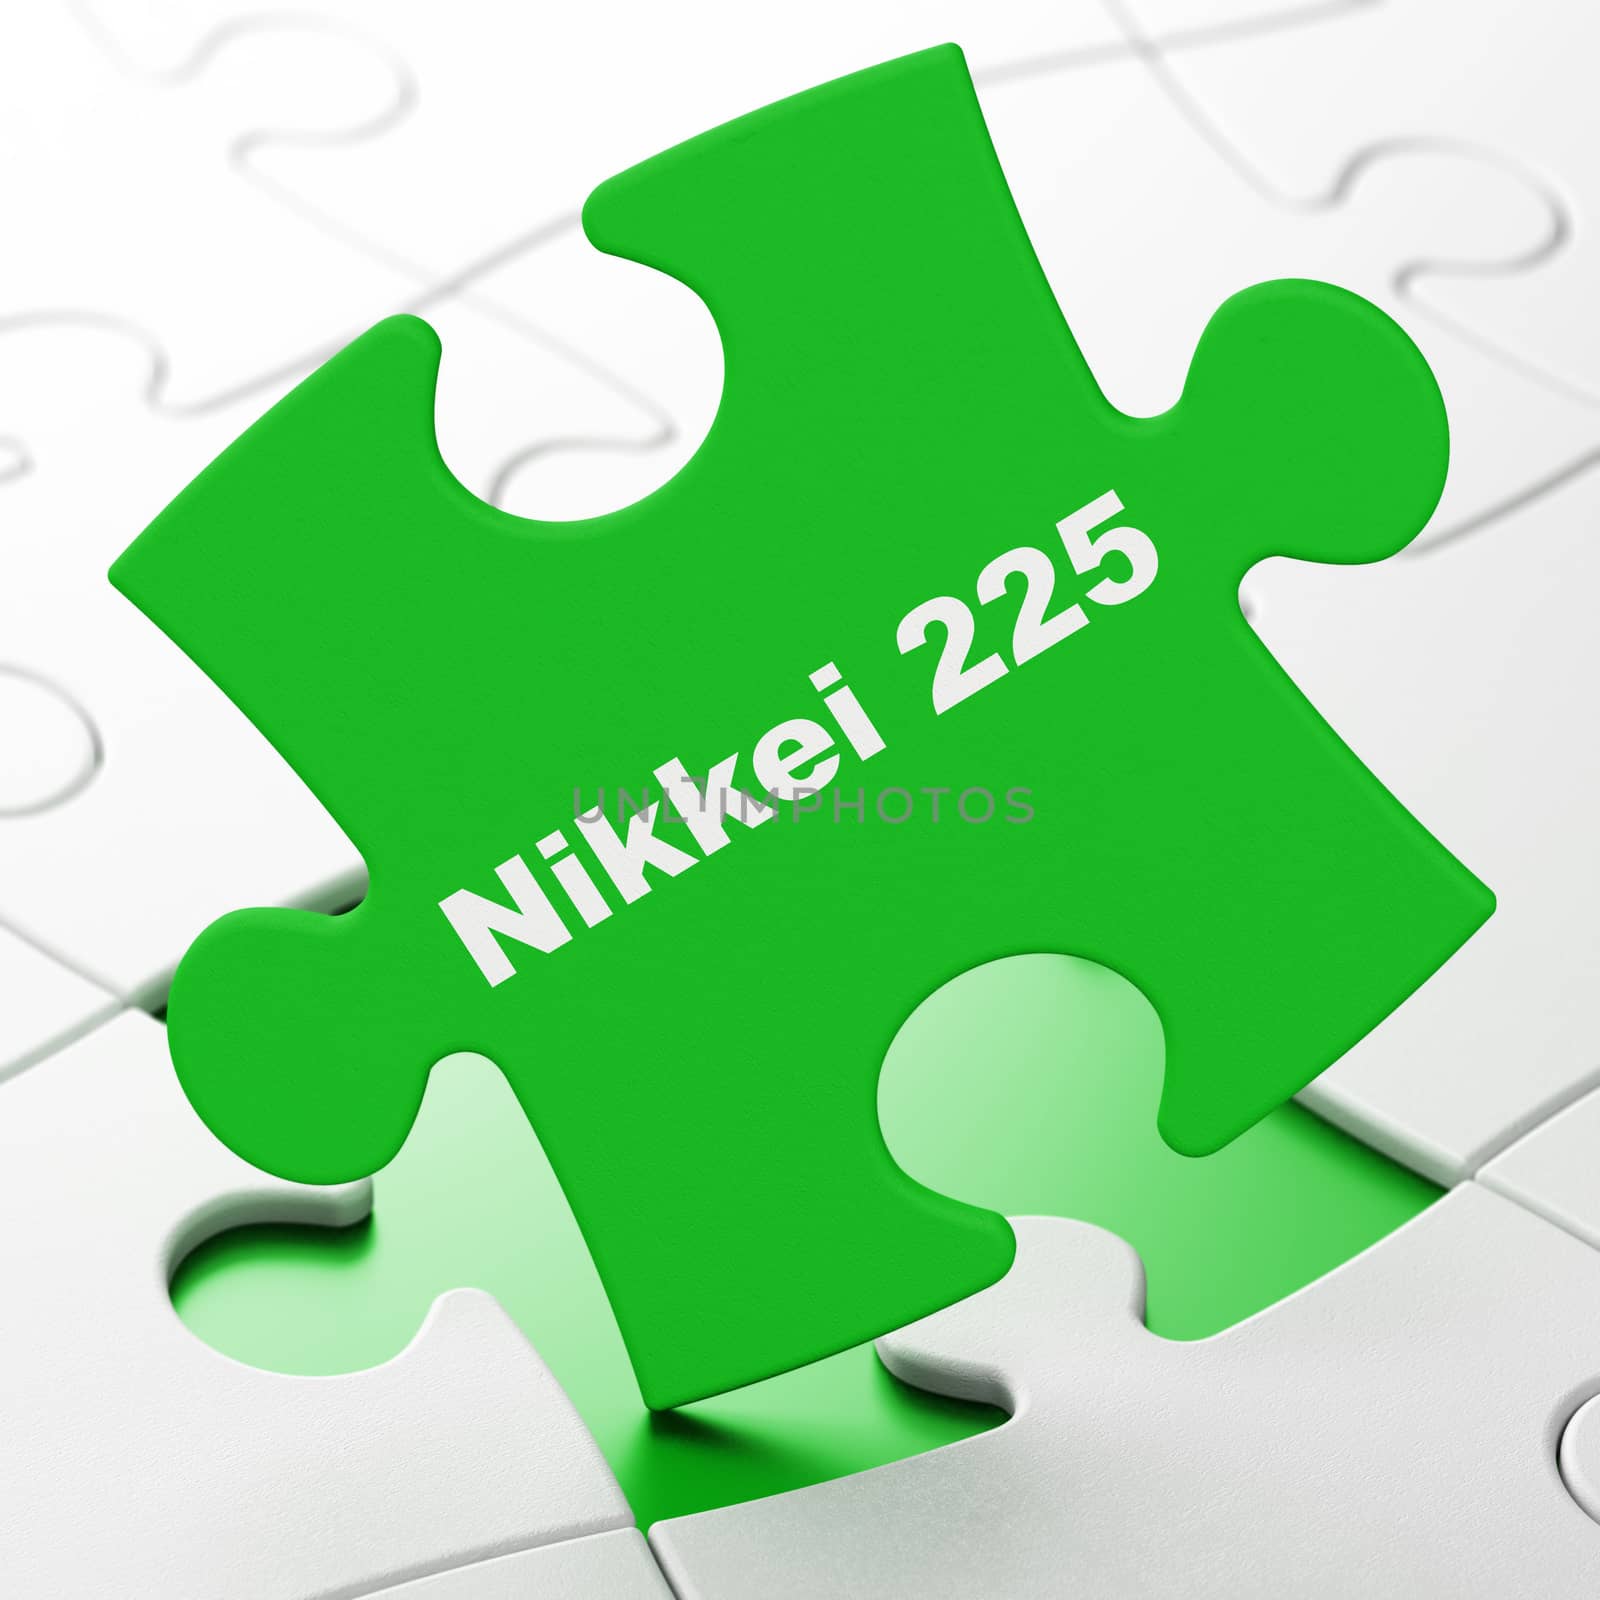 Stock market indexes concept: Nikkei 225 on puzzle background by maxkabakov